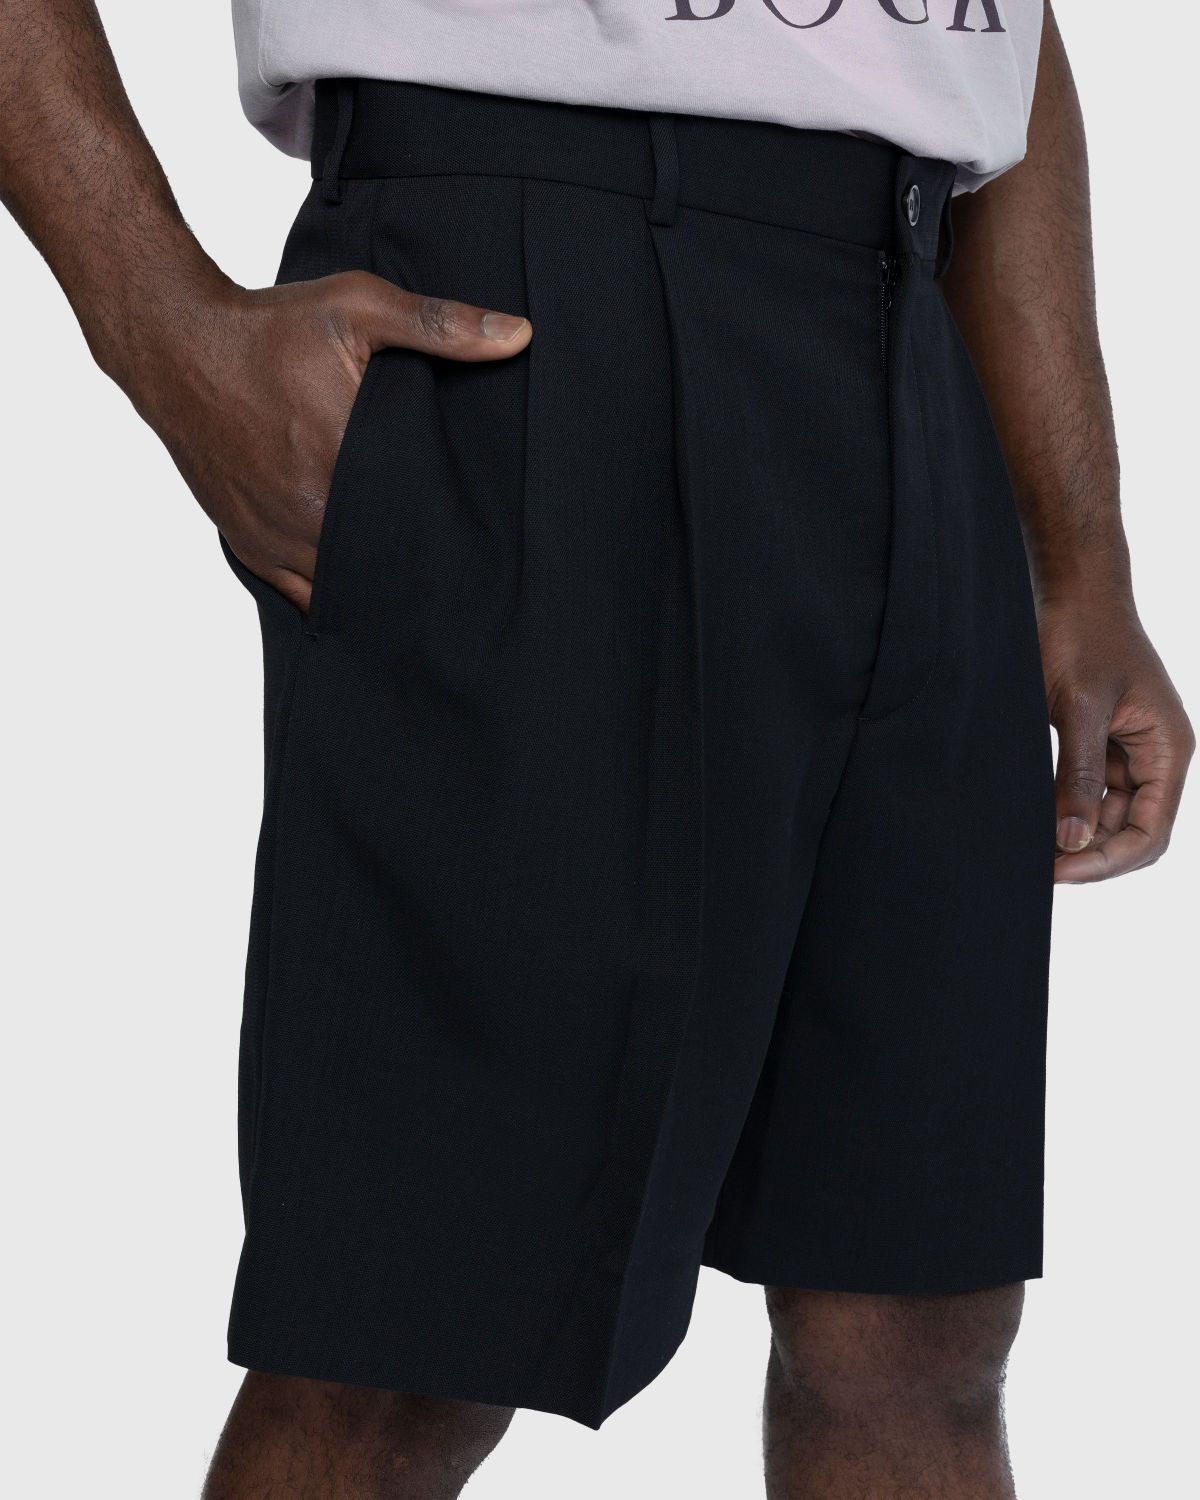 Acne Studios – Tailored Pleated Shorts Black - Bermuda Cuts - Black - Image 6